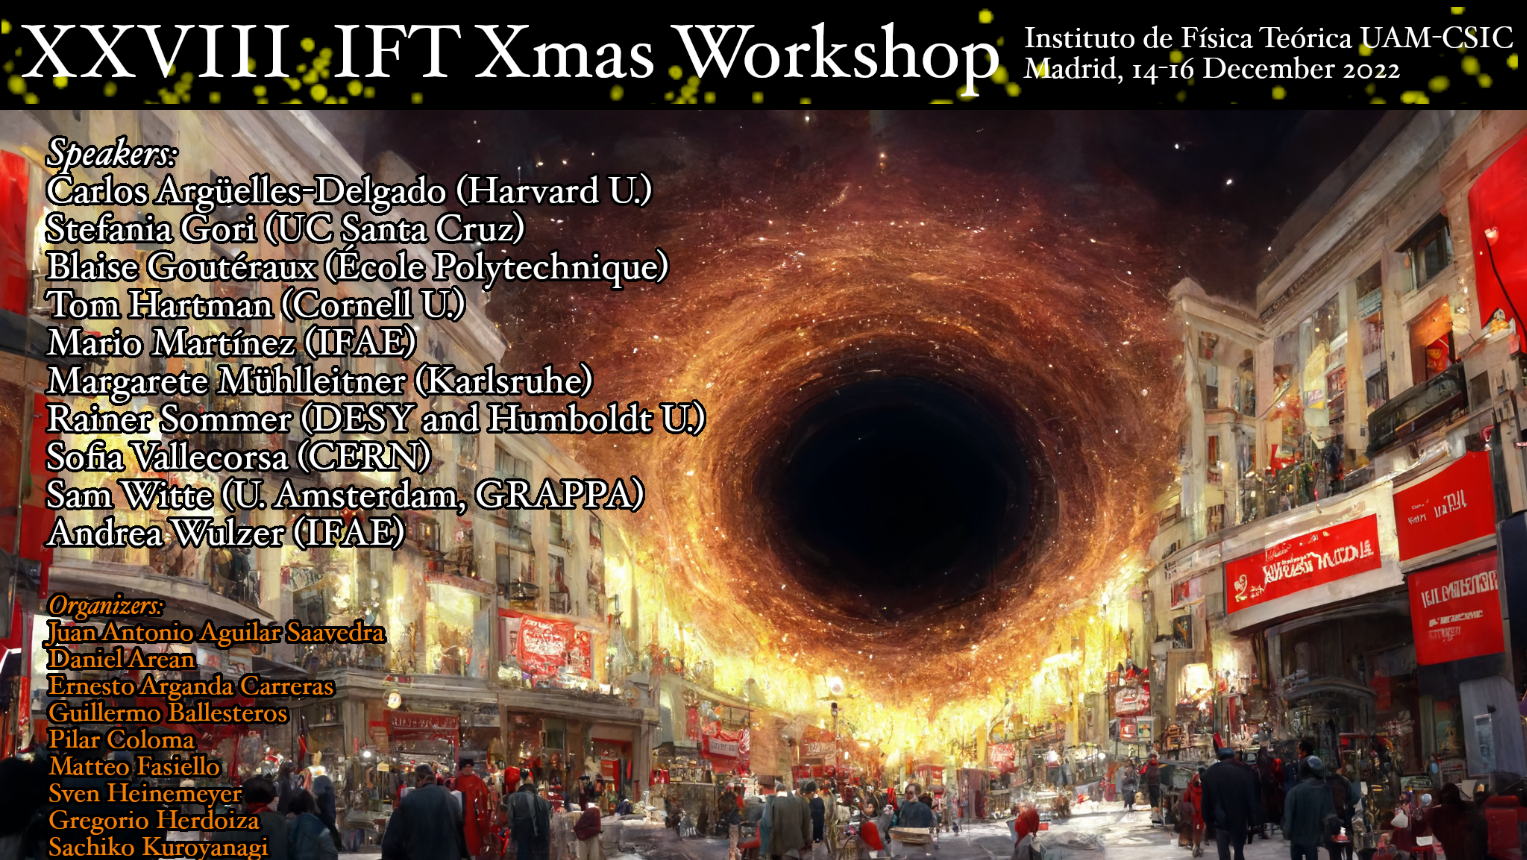 28th IFT Xmas Workshop